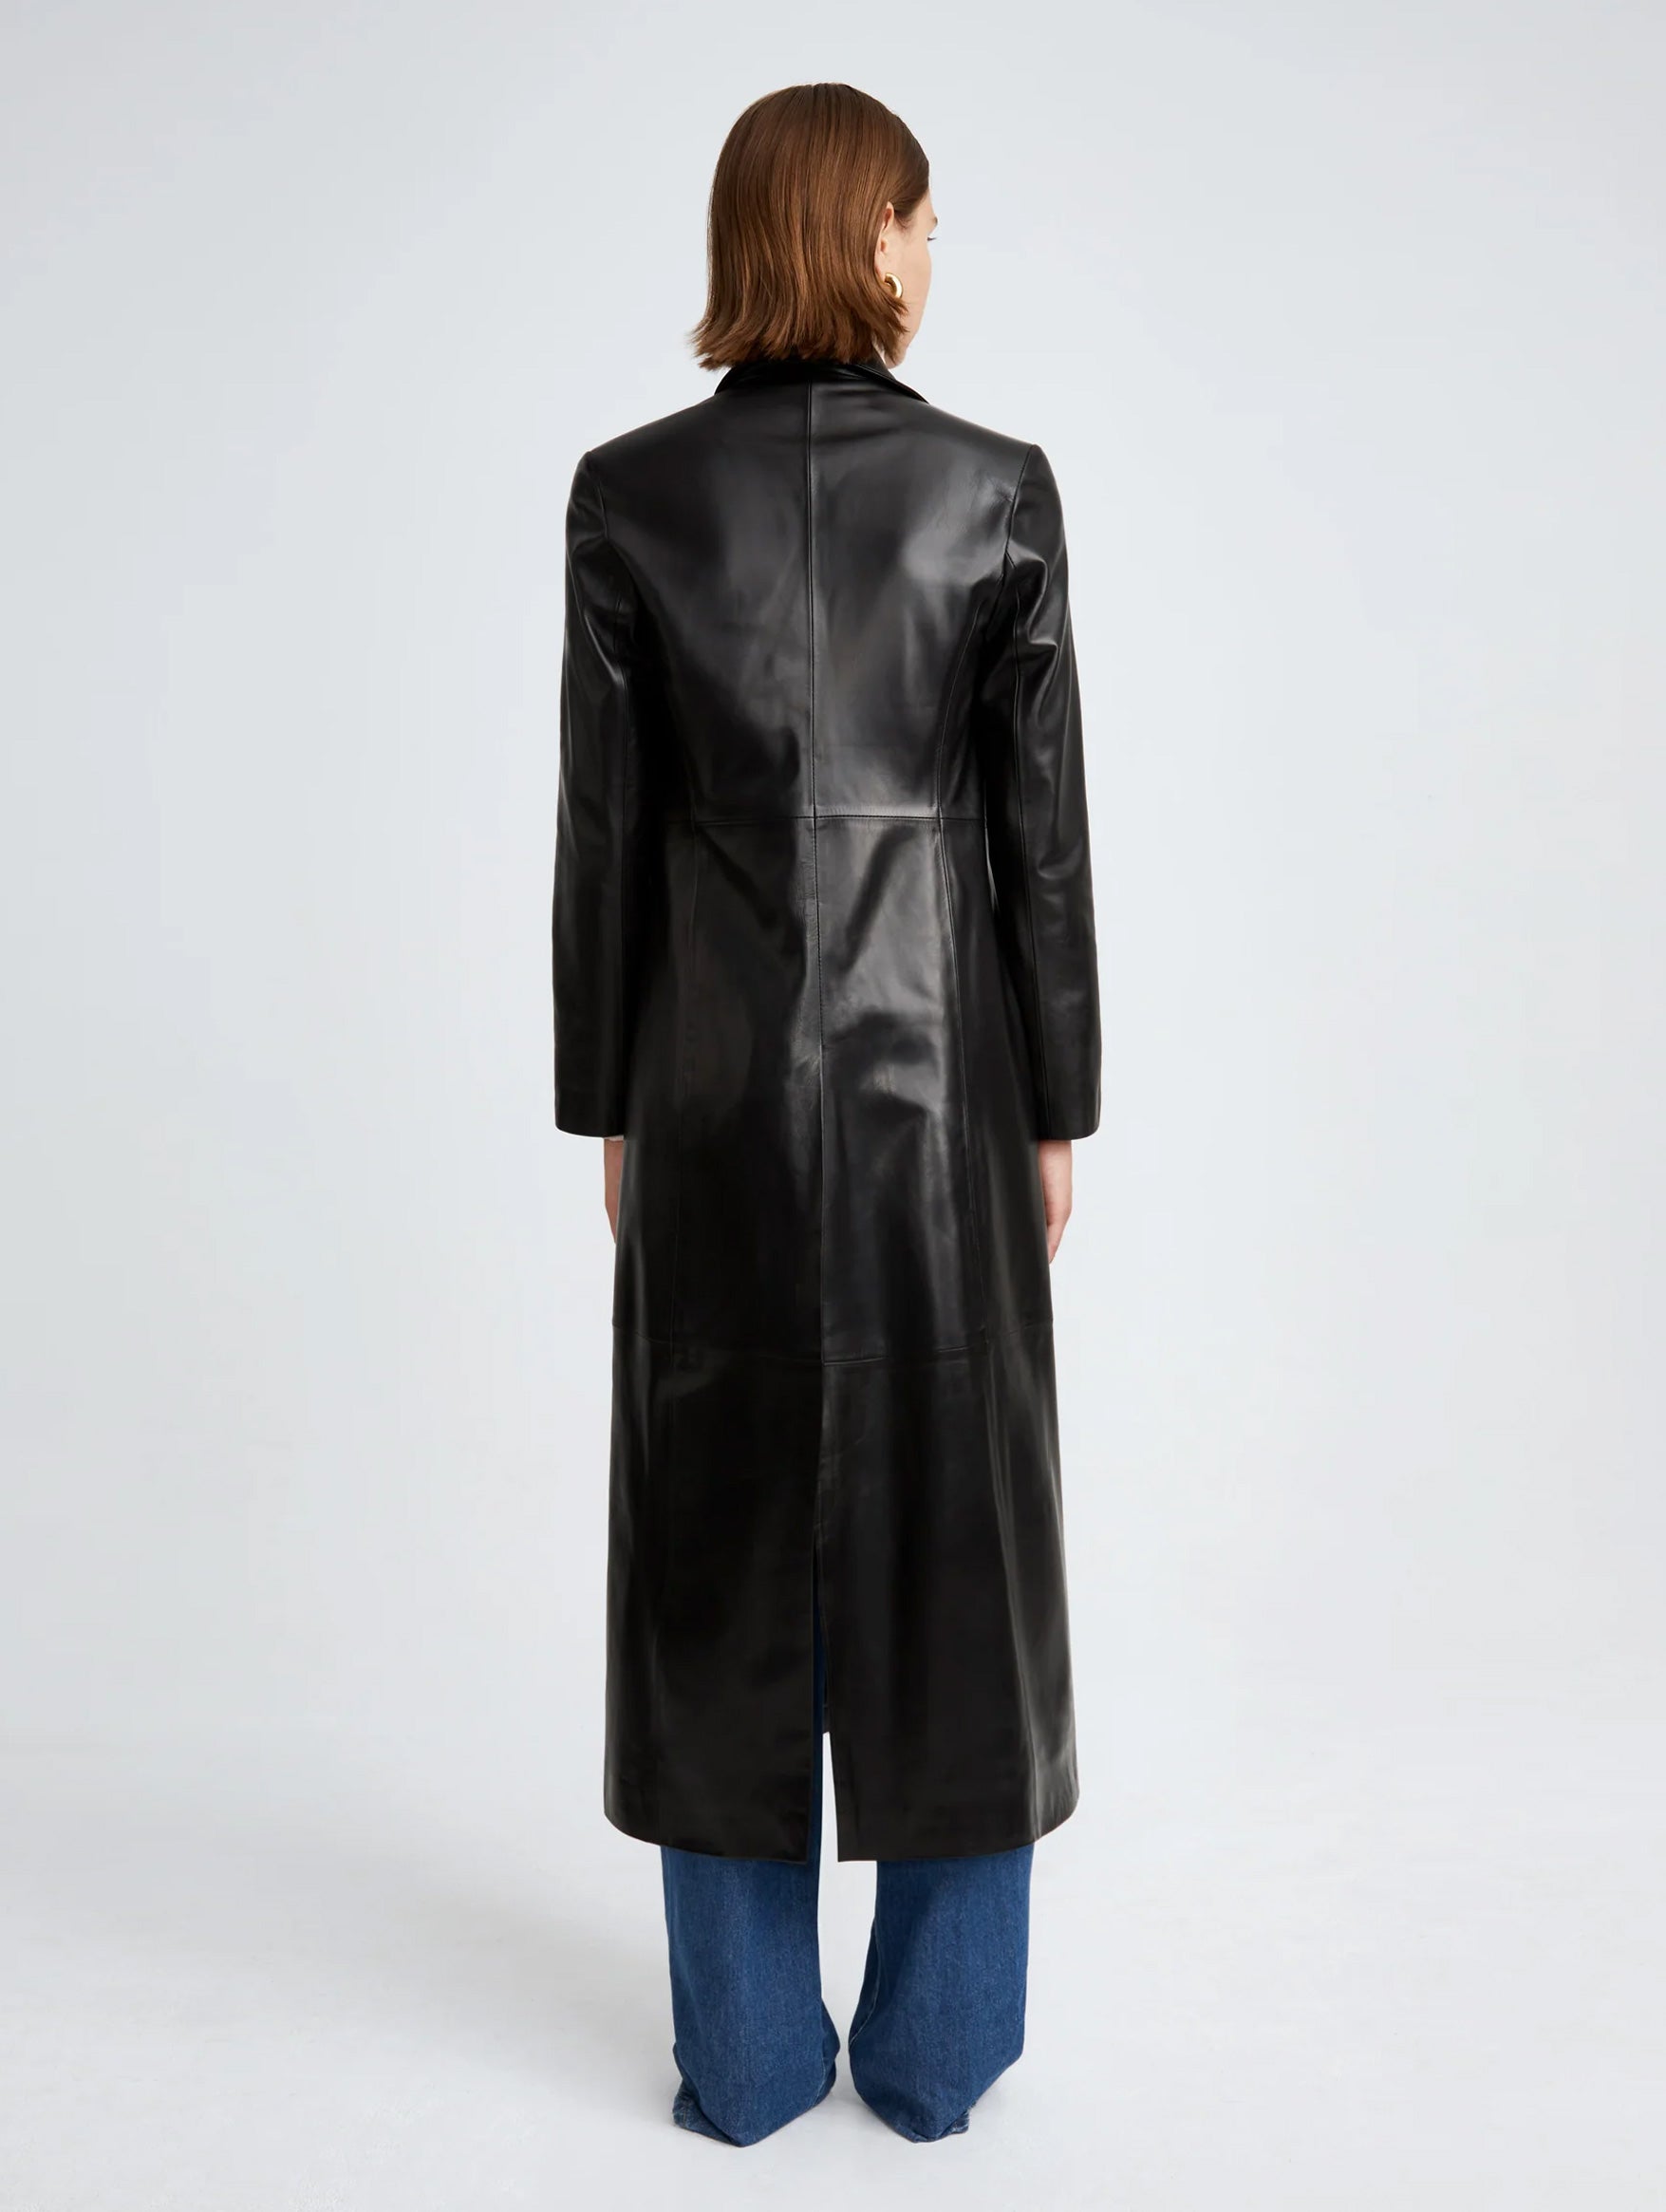 Gotham Sleek Leather Coat in Black